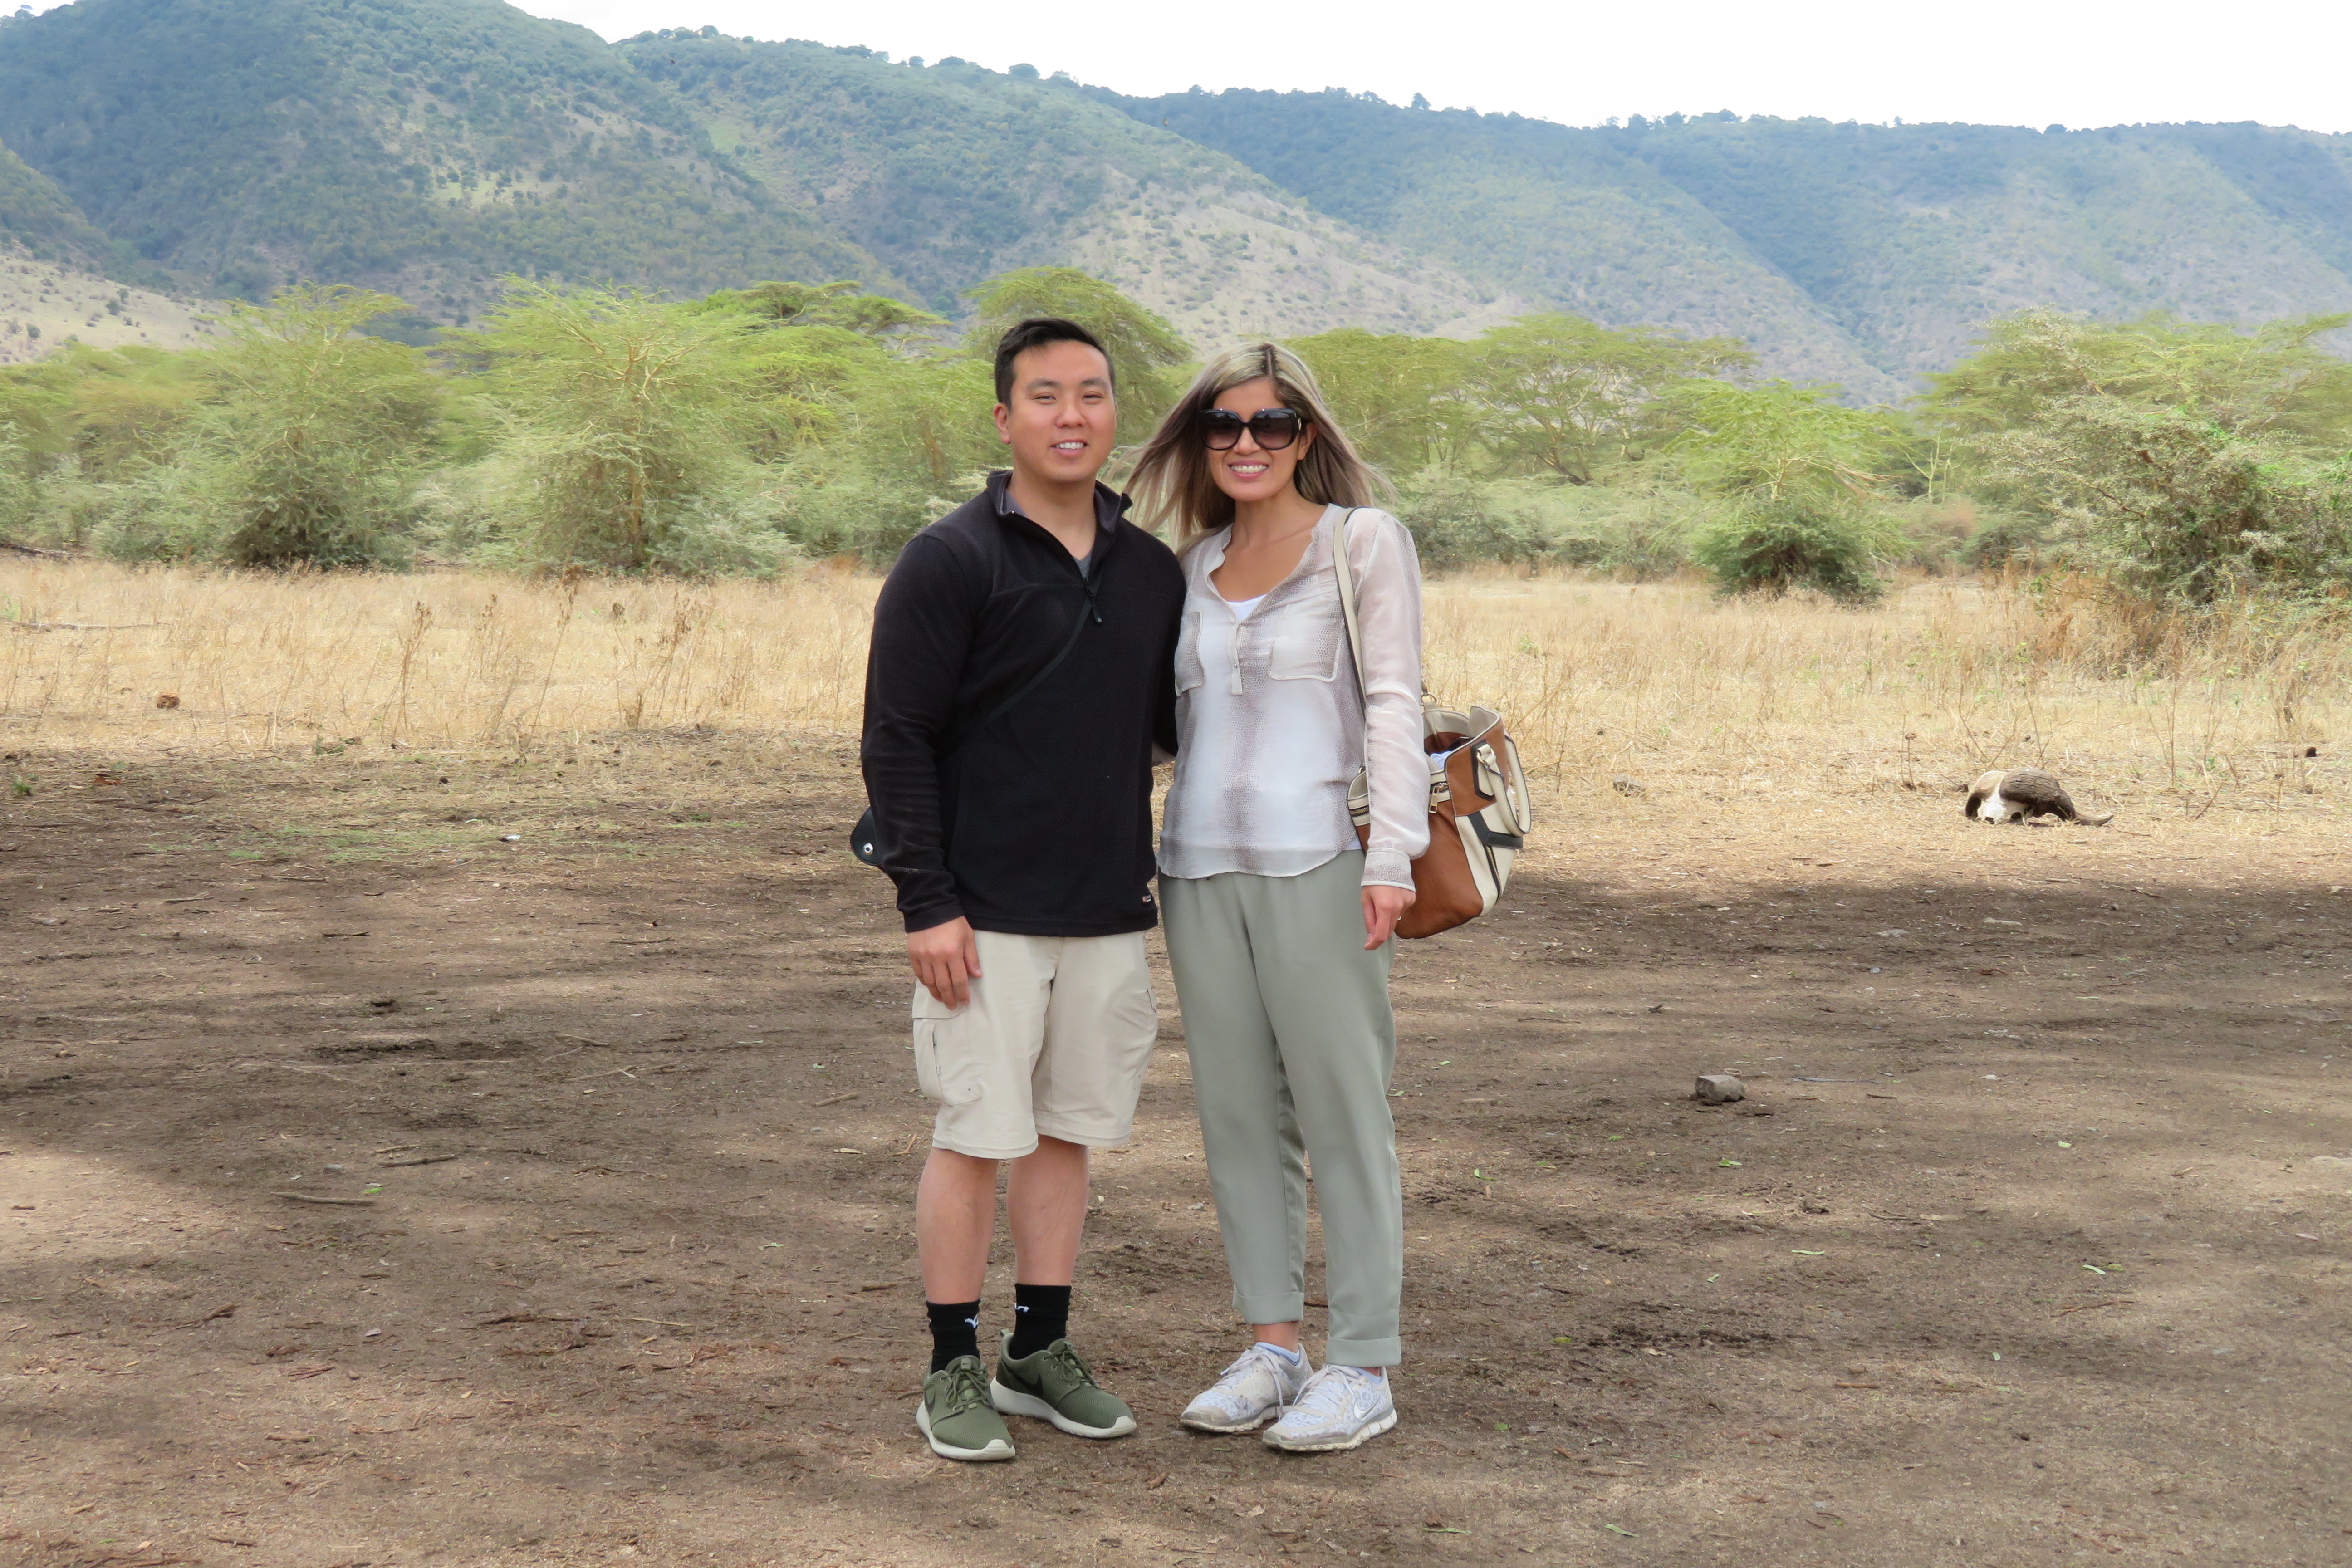 Ngorongoro safari outfits